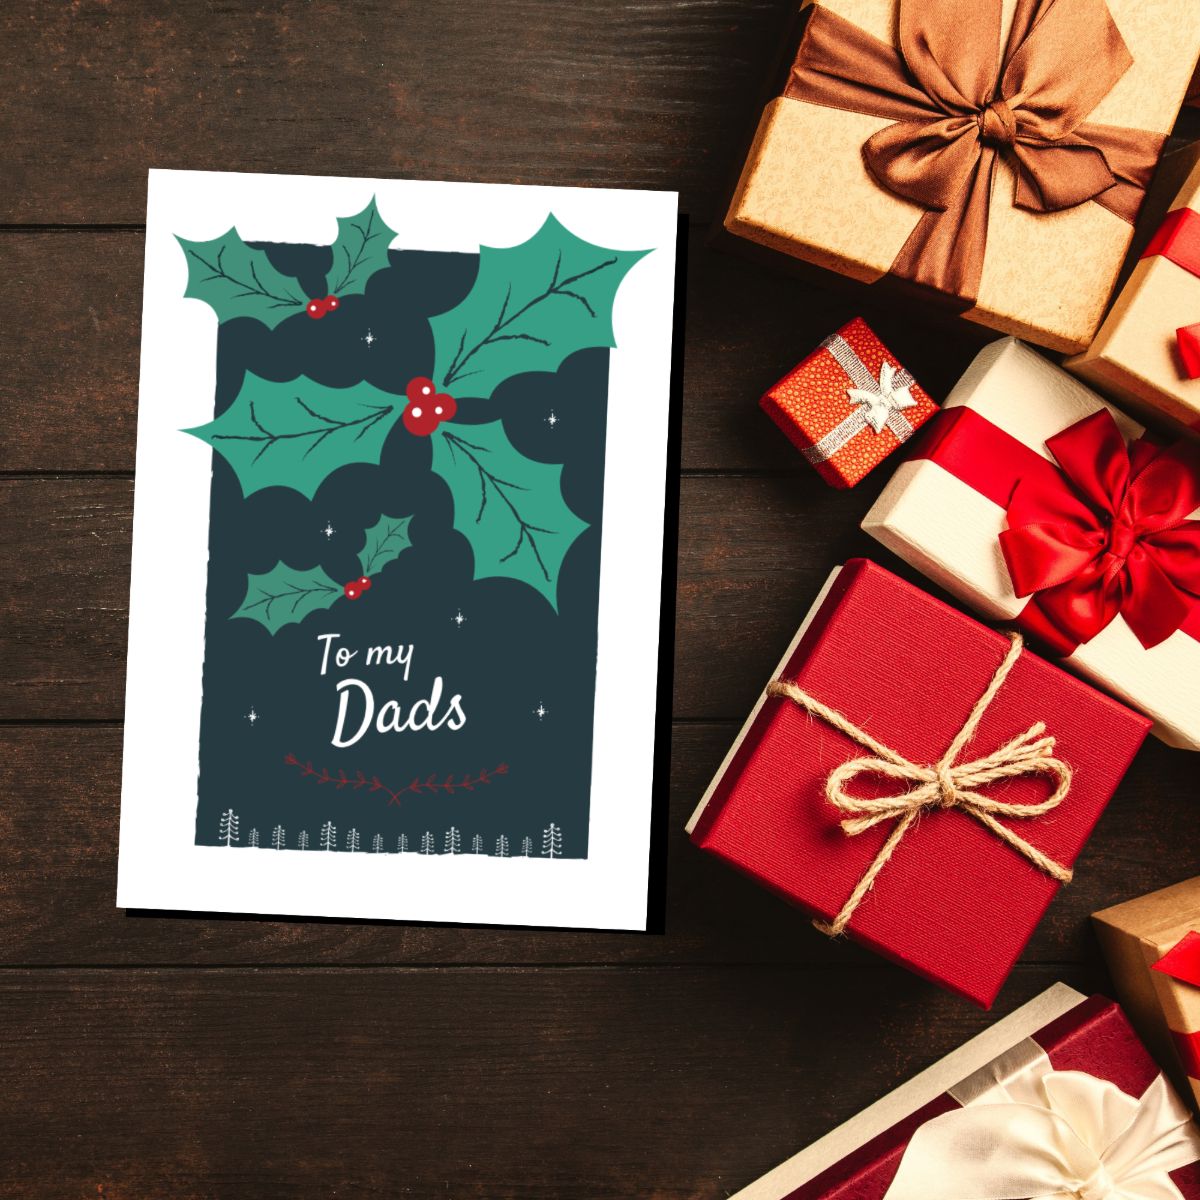 To my Gay Dads at Christmas Greetings Card